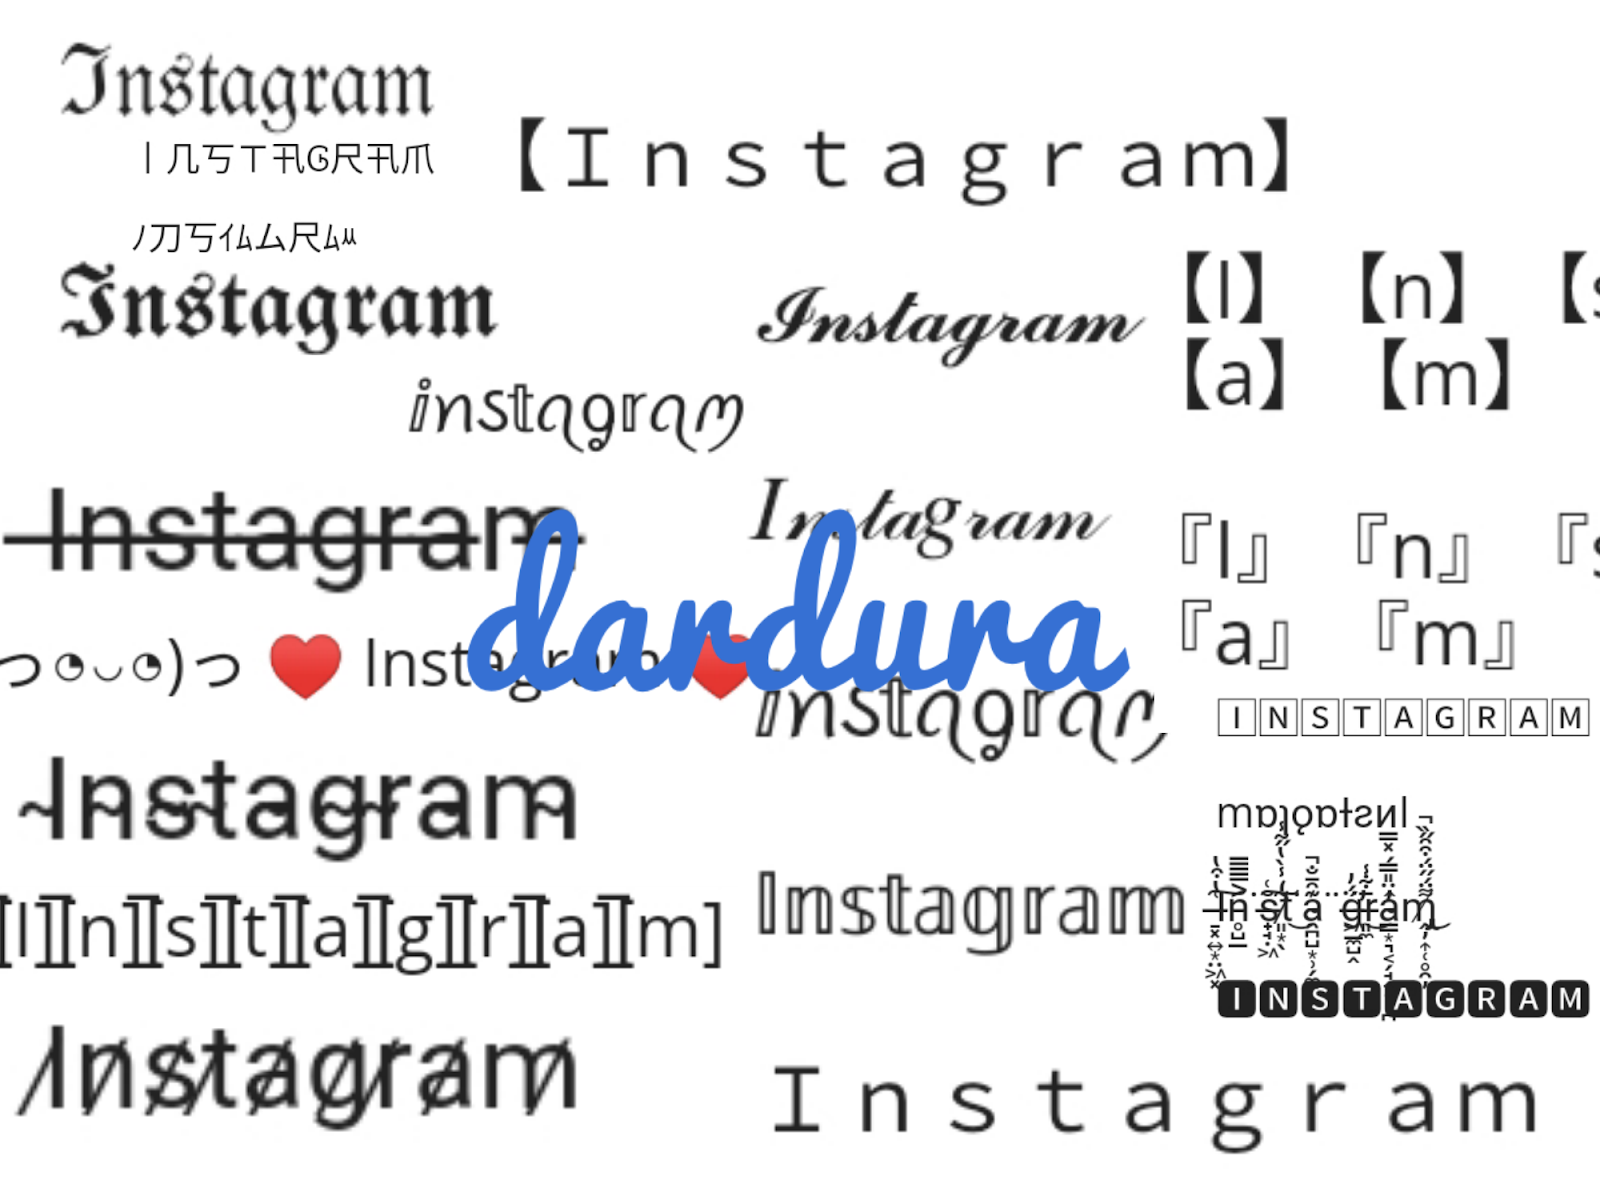 Nama font instagram